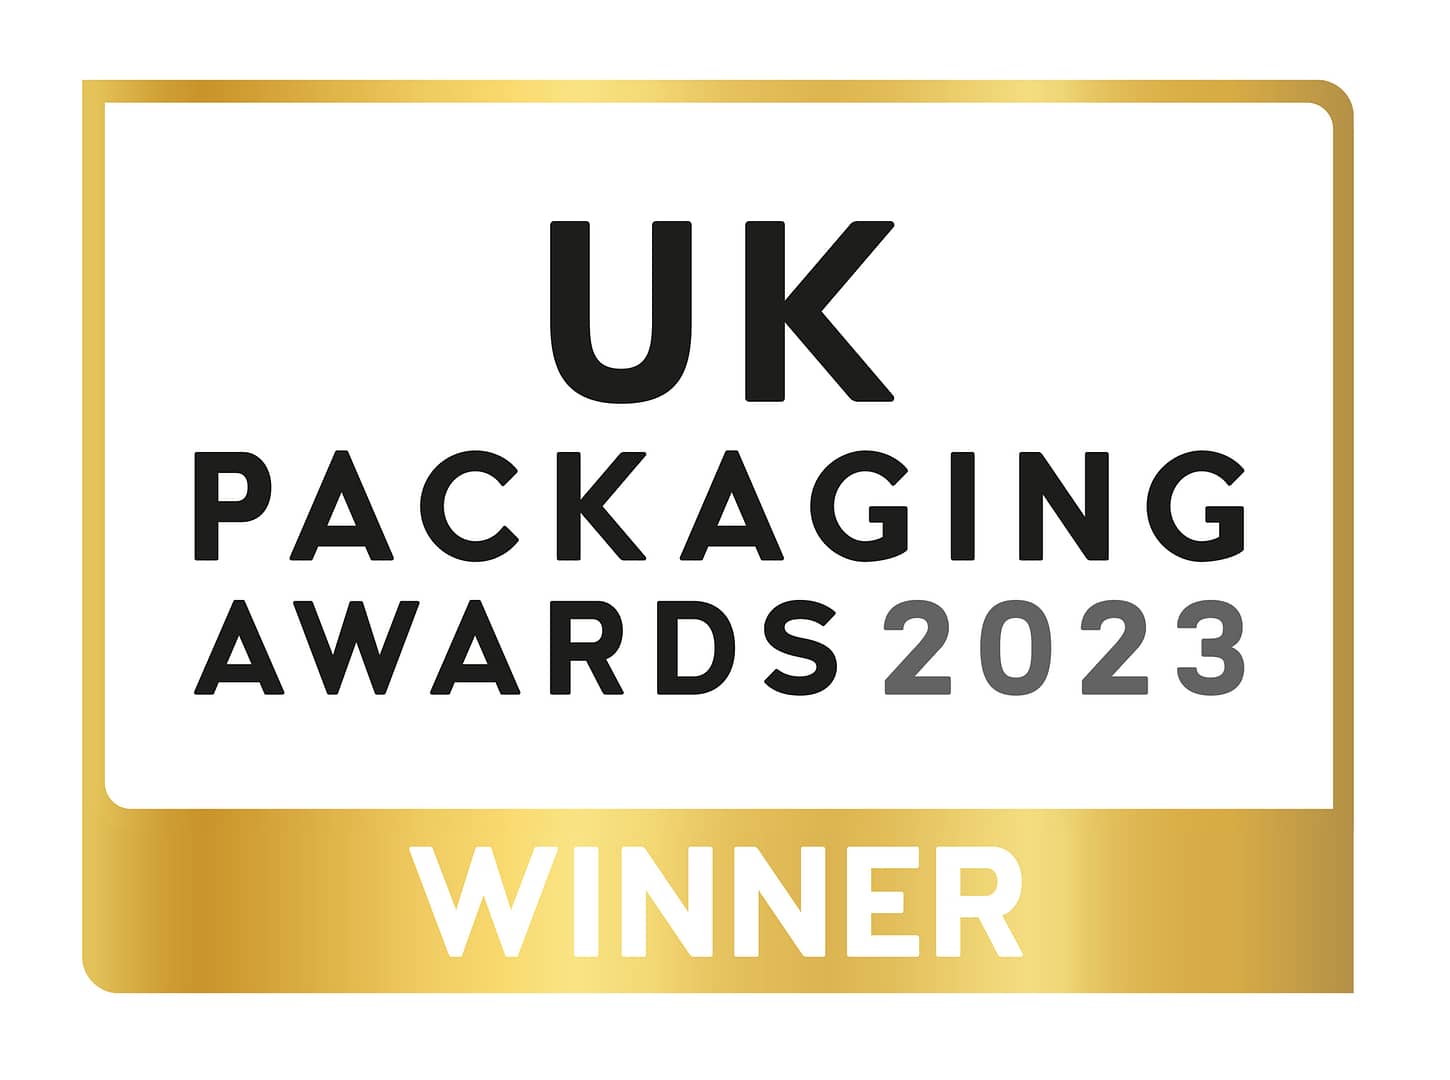 UK Packaging Awards Logo 2023 Winner Original